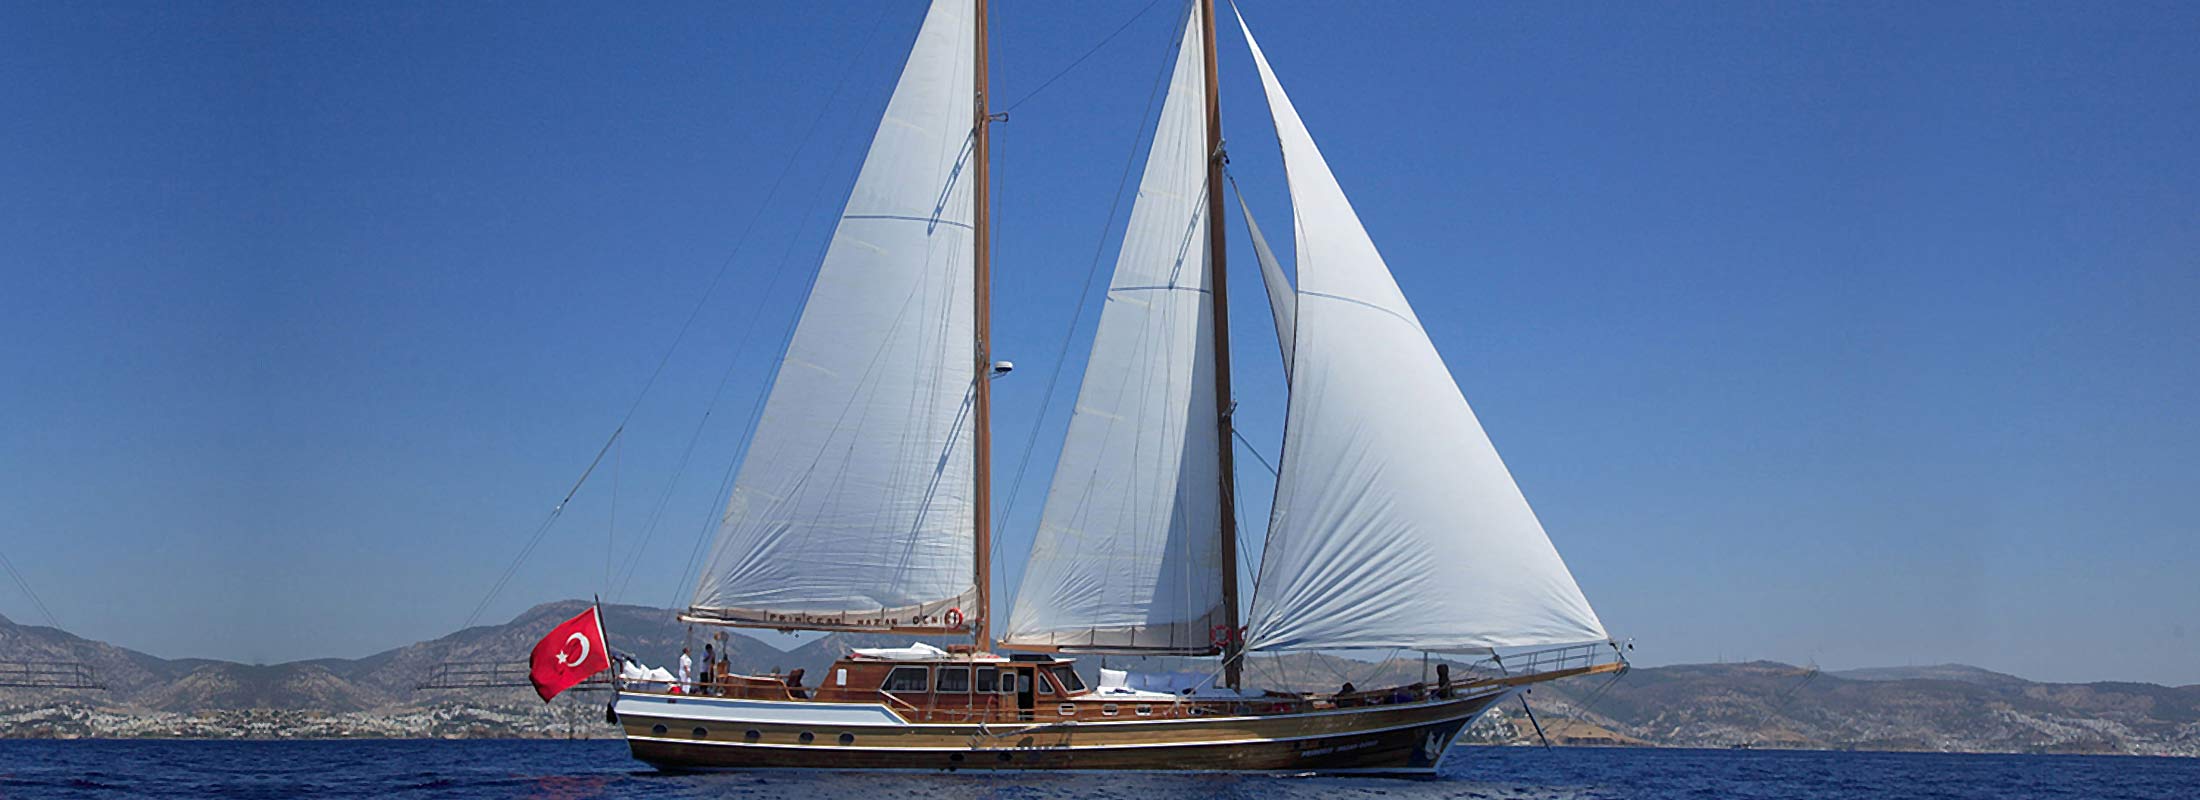 Princess Nazan Deniz Sailing Yacht for Charter Mediterranean slider 1 